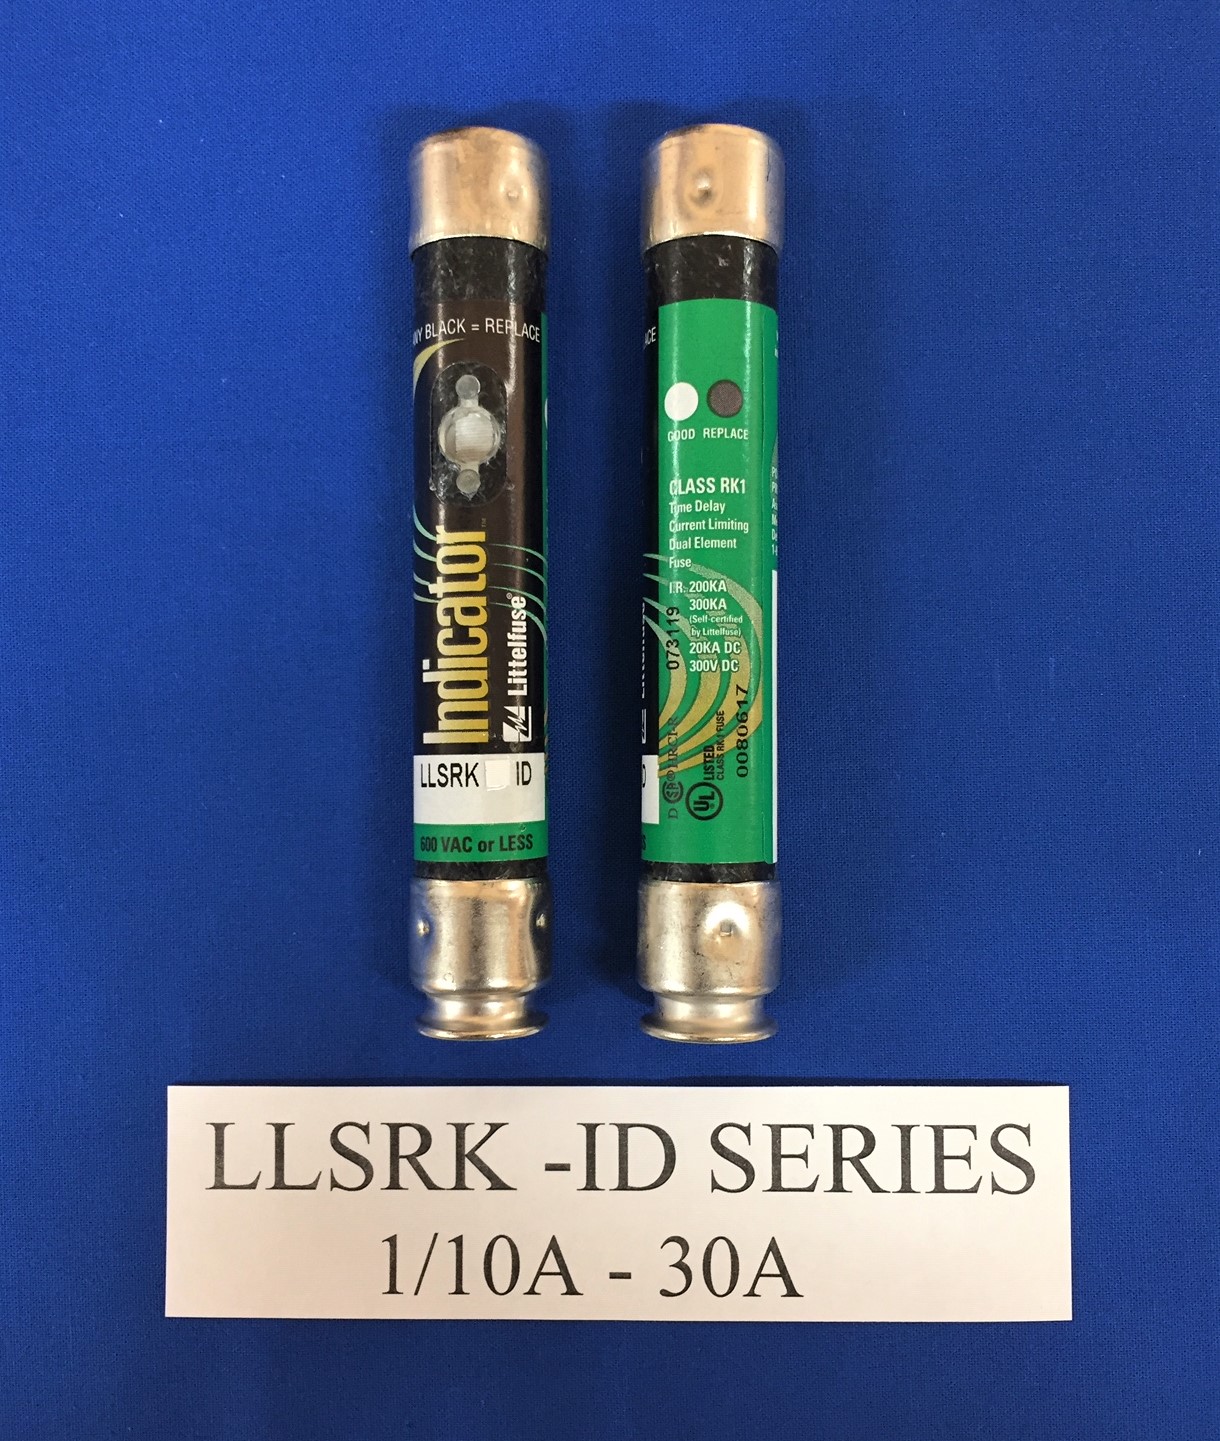 Details about   New Lot Littelfuse LLSRK 20 ID Indicator Amp Fuses Bussmann LPS RK 20SP Class R 